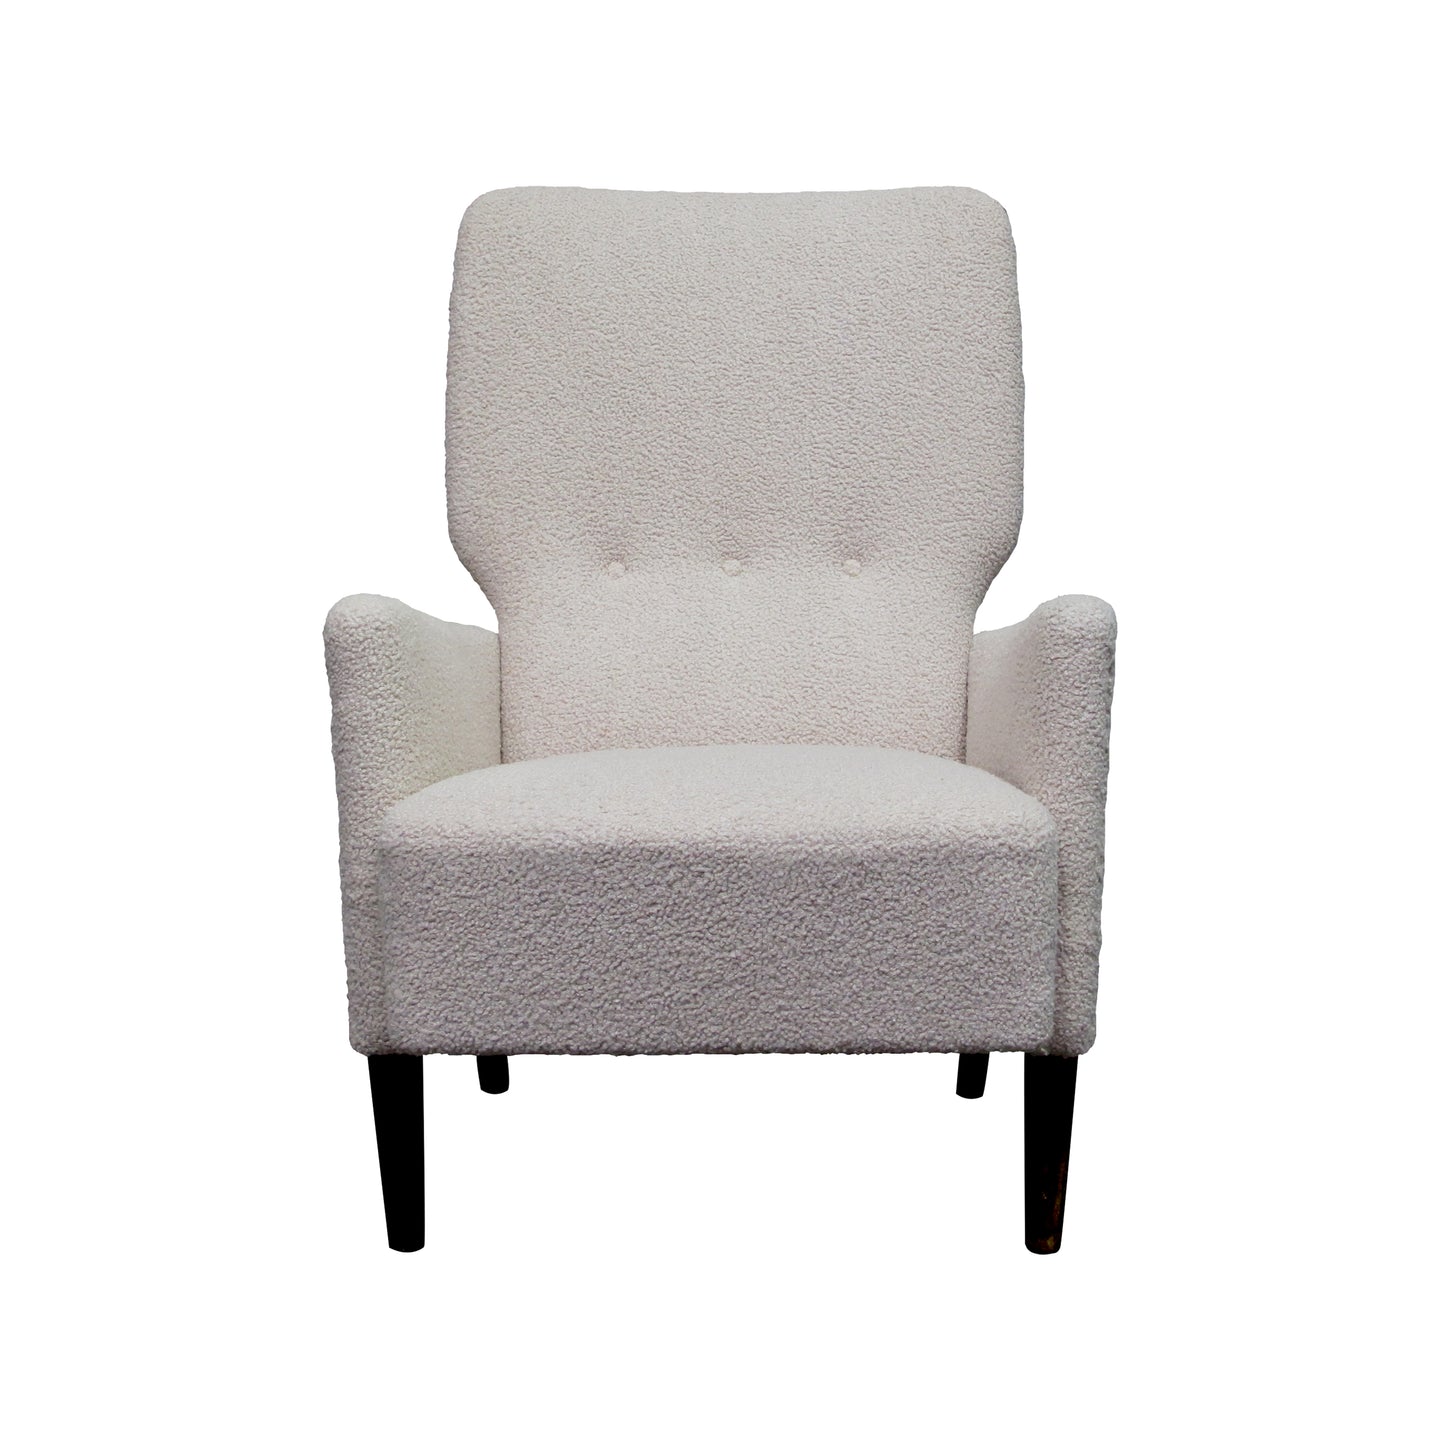 1940s Danish high back stylish lounge chair newly upholstered